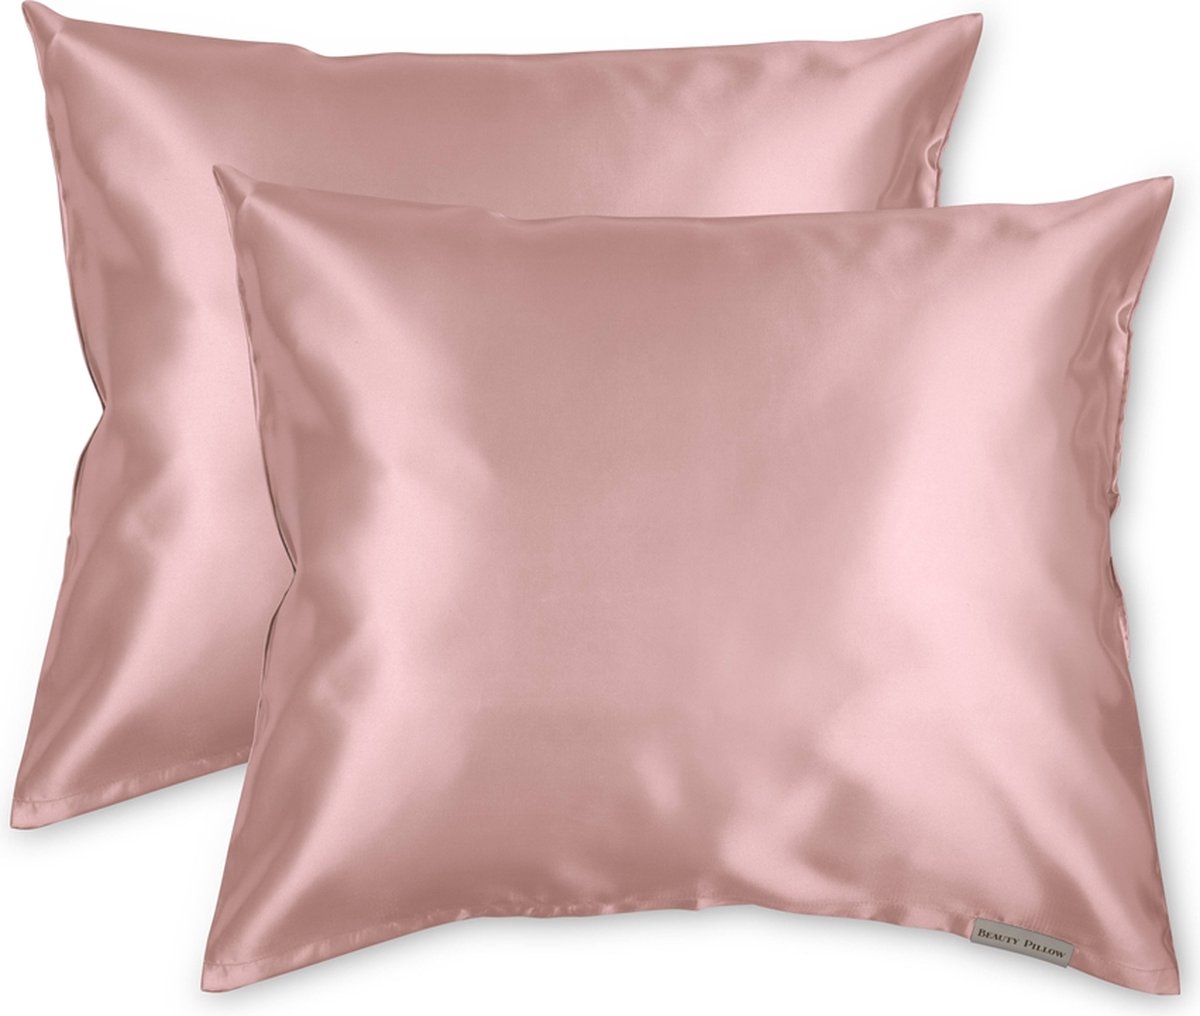 Beauty Pillow Rose Gold - set van 2 kussenslopen